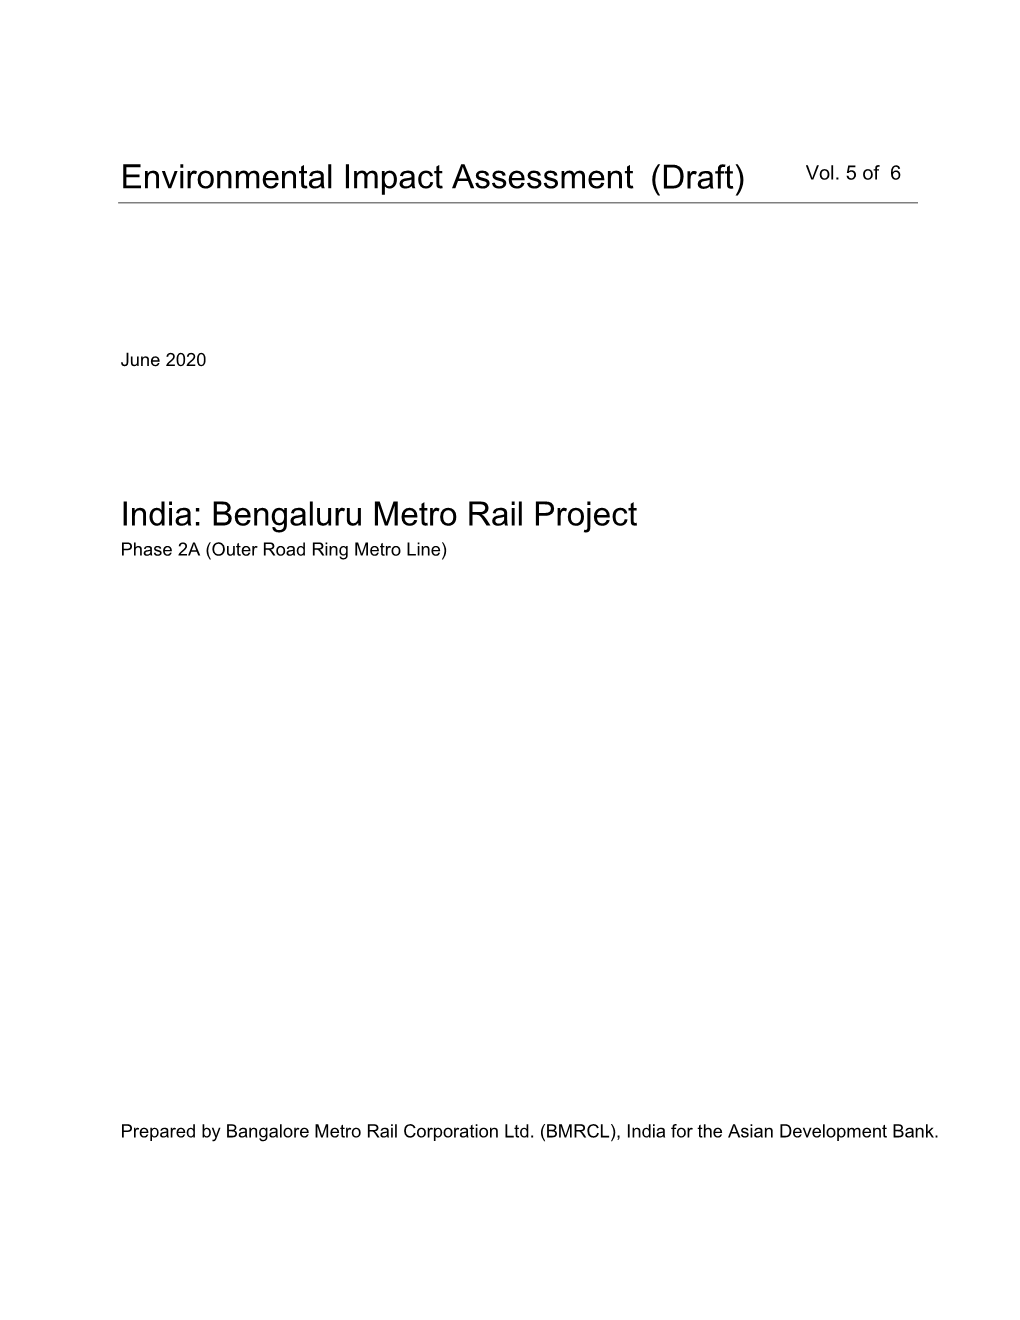 Environmental Impact Assessment India